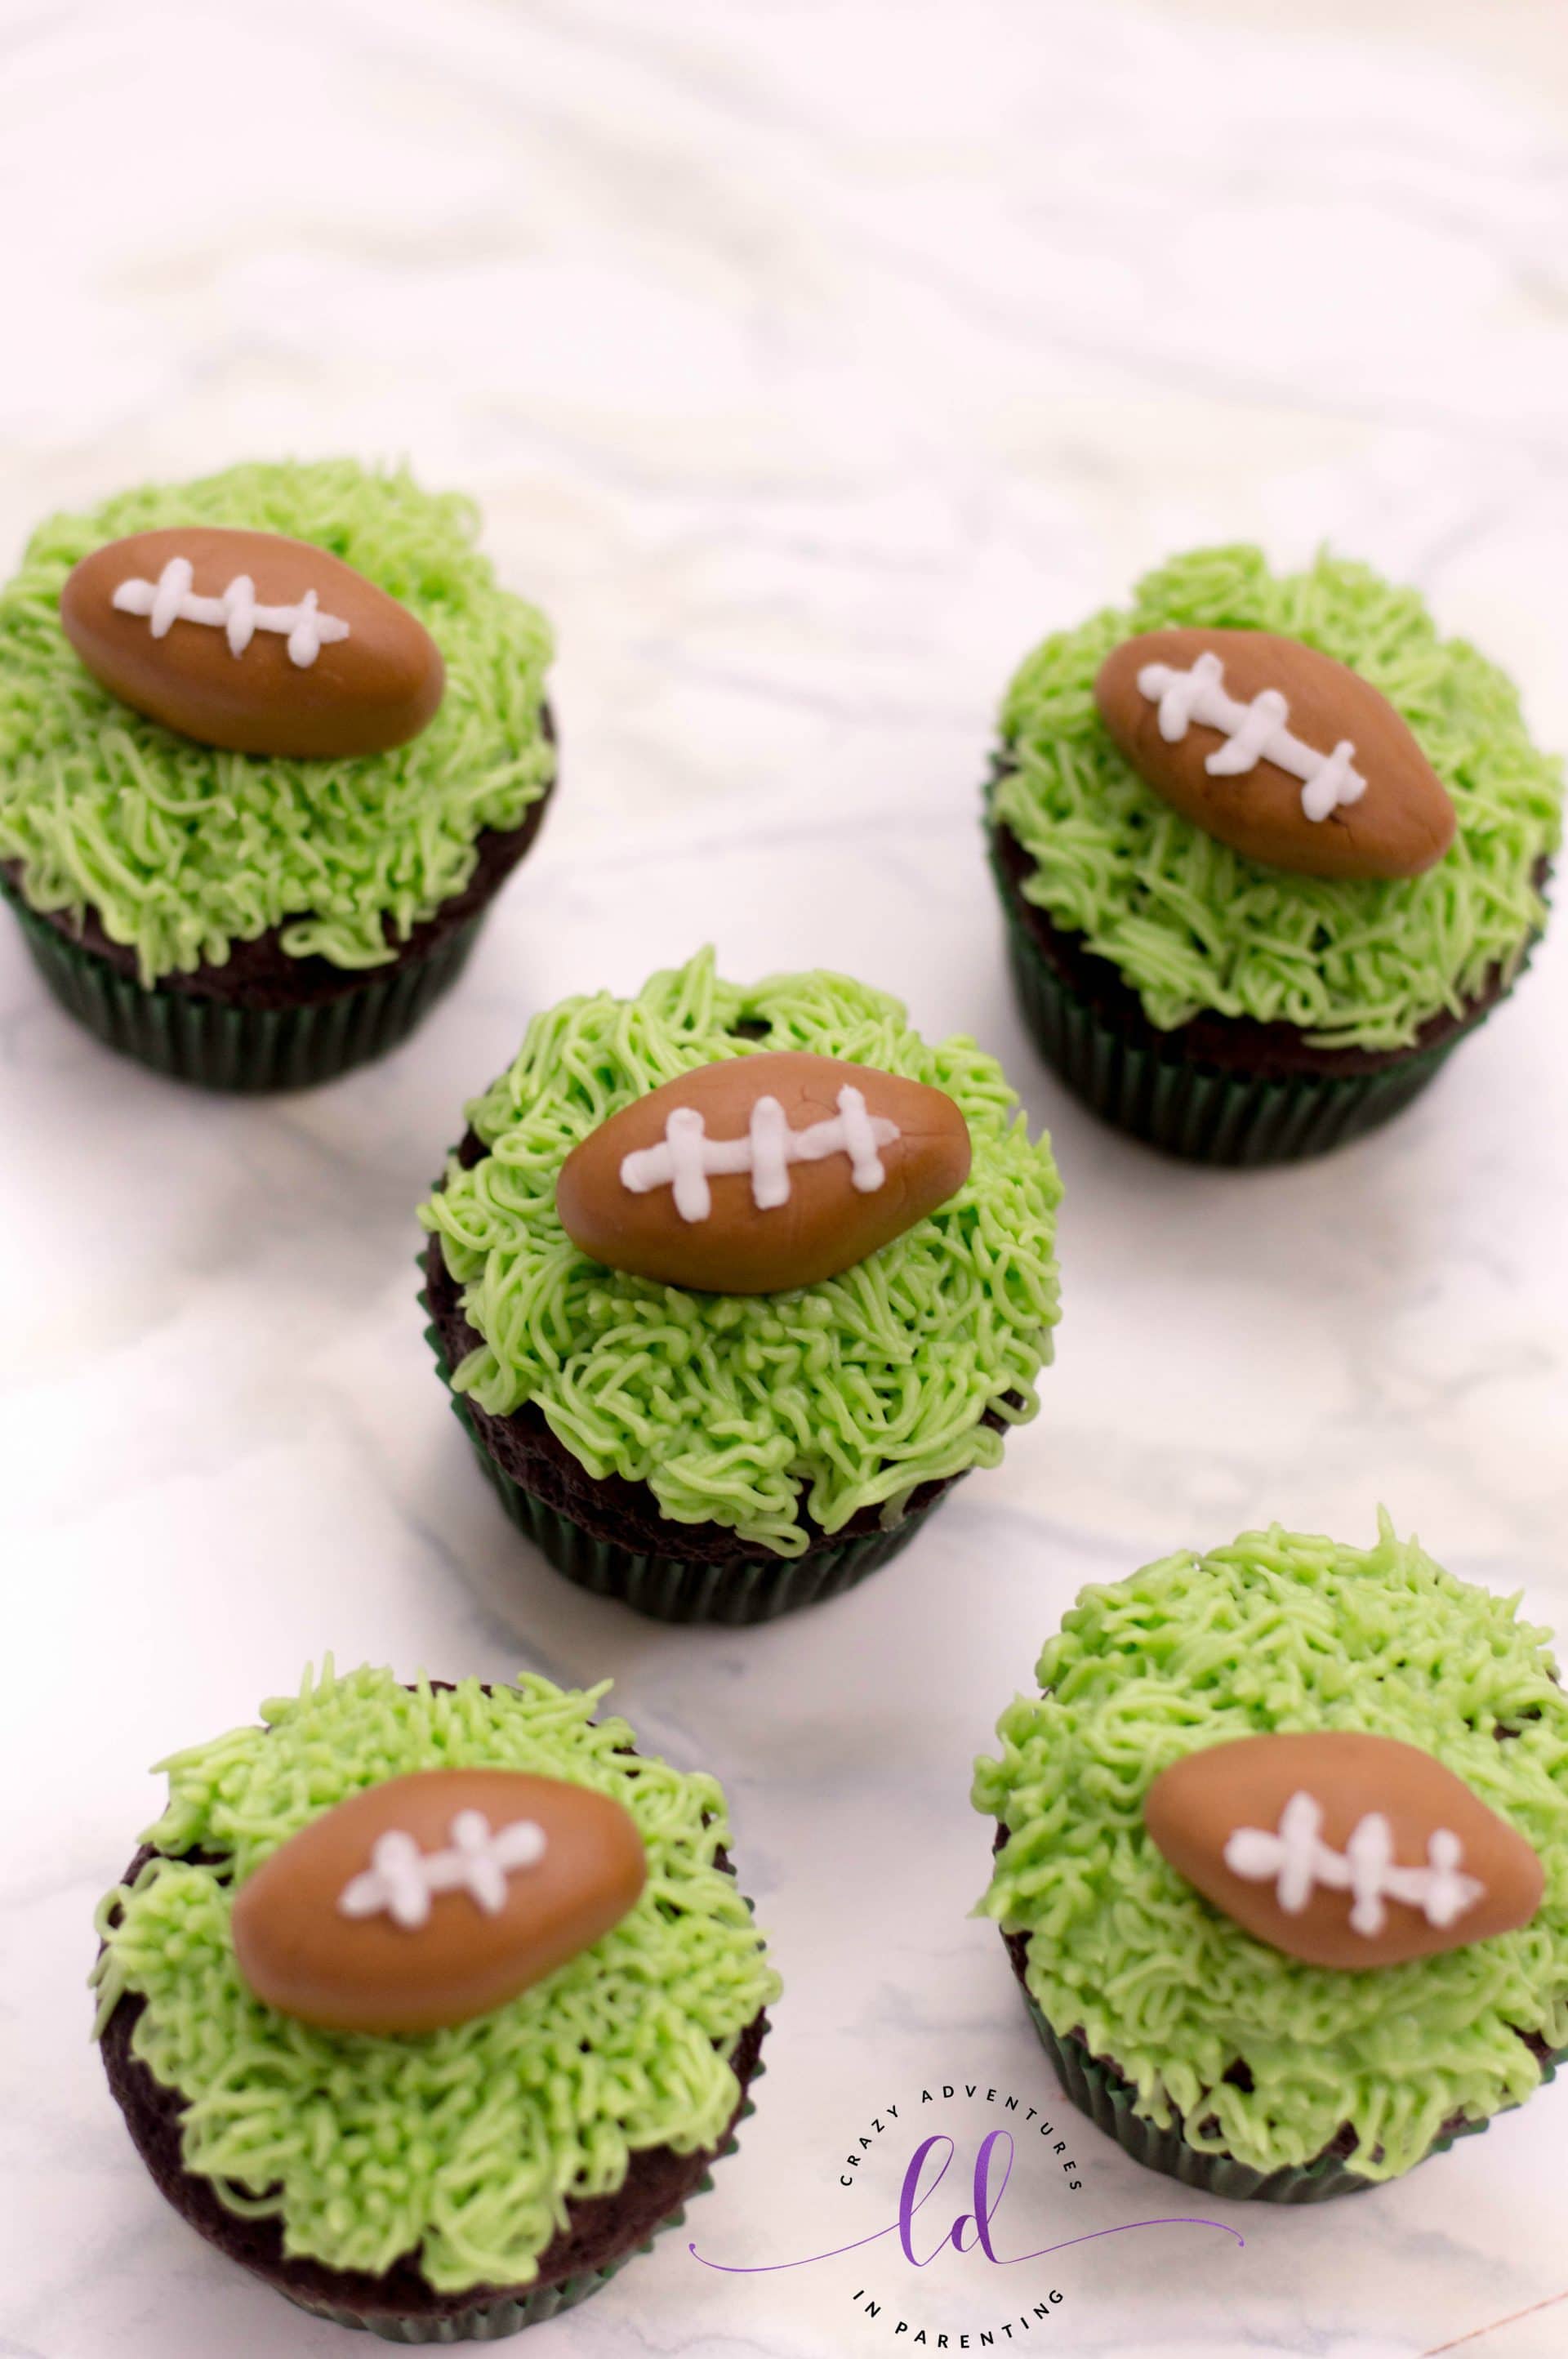 Fun Football Cupcakes for the Big Game